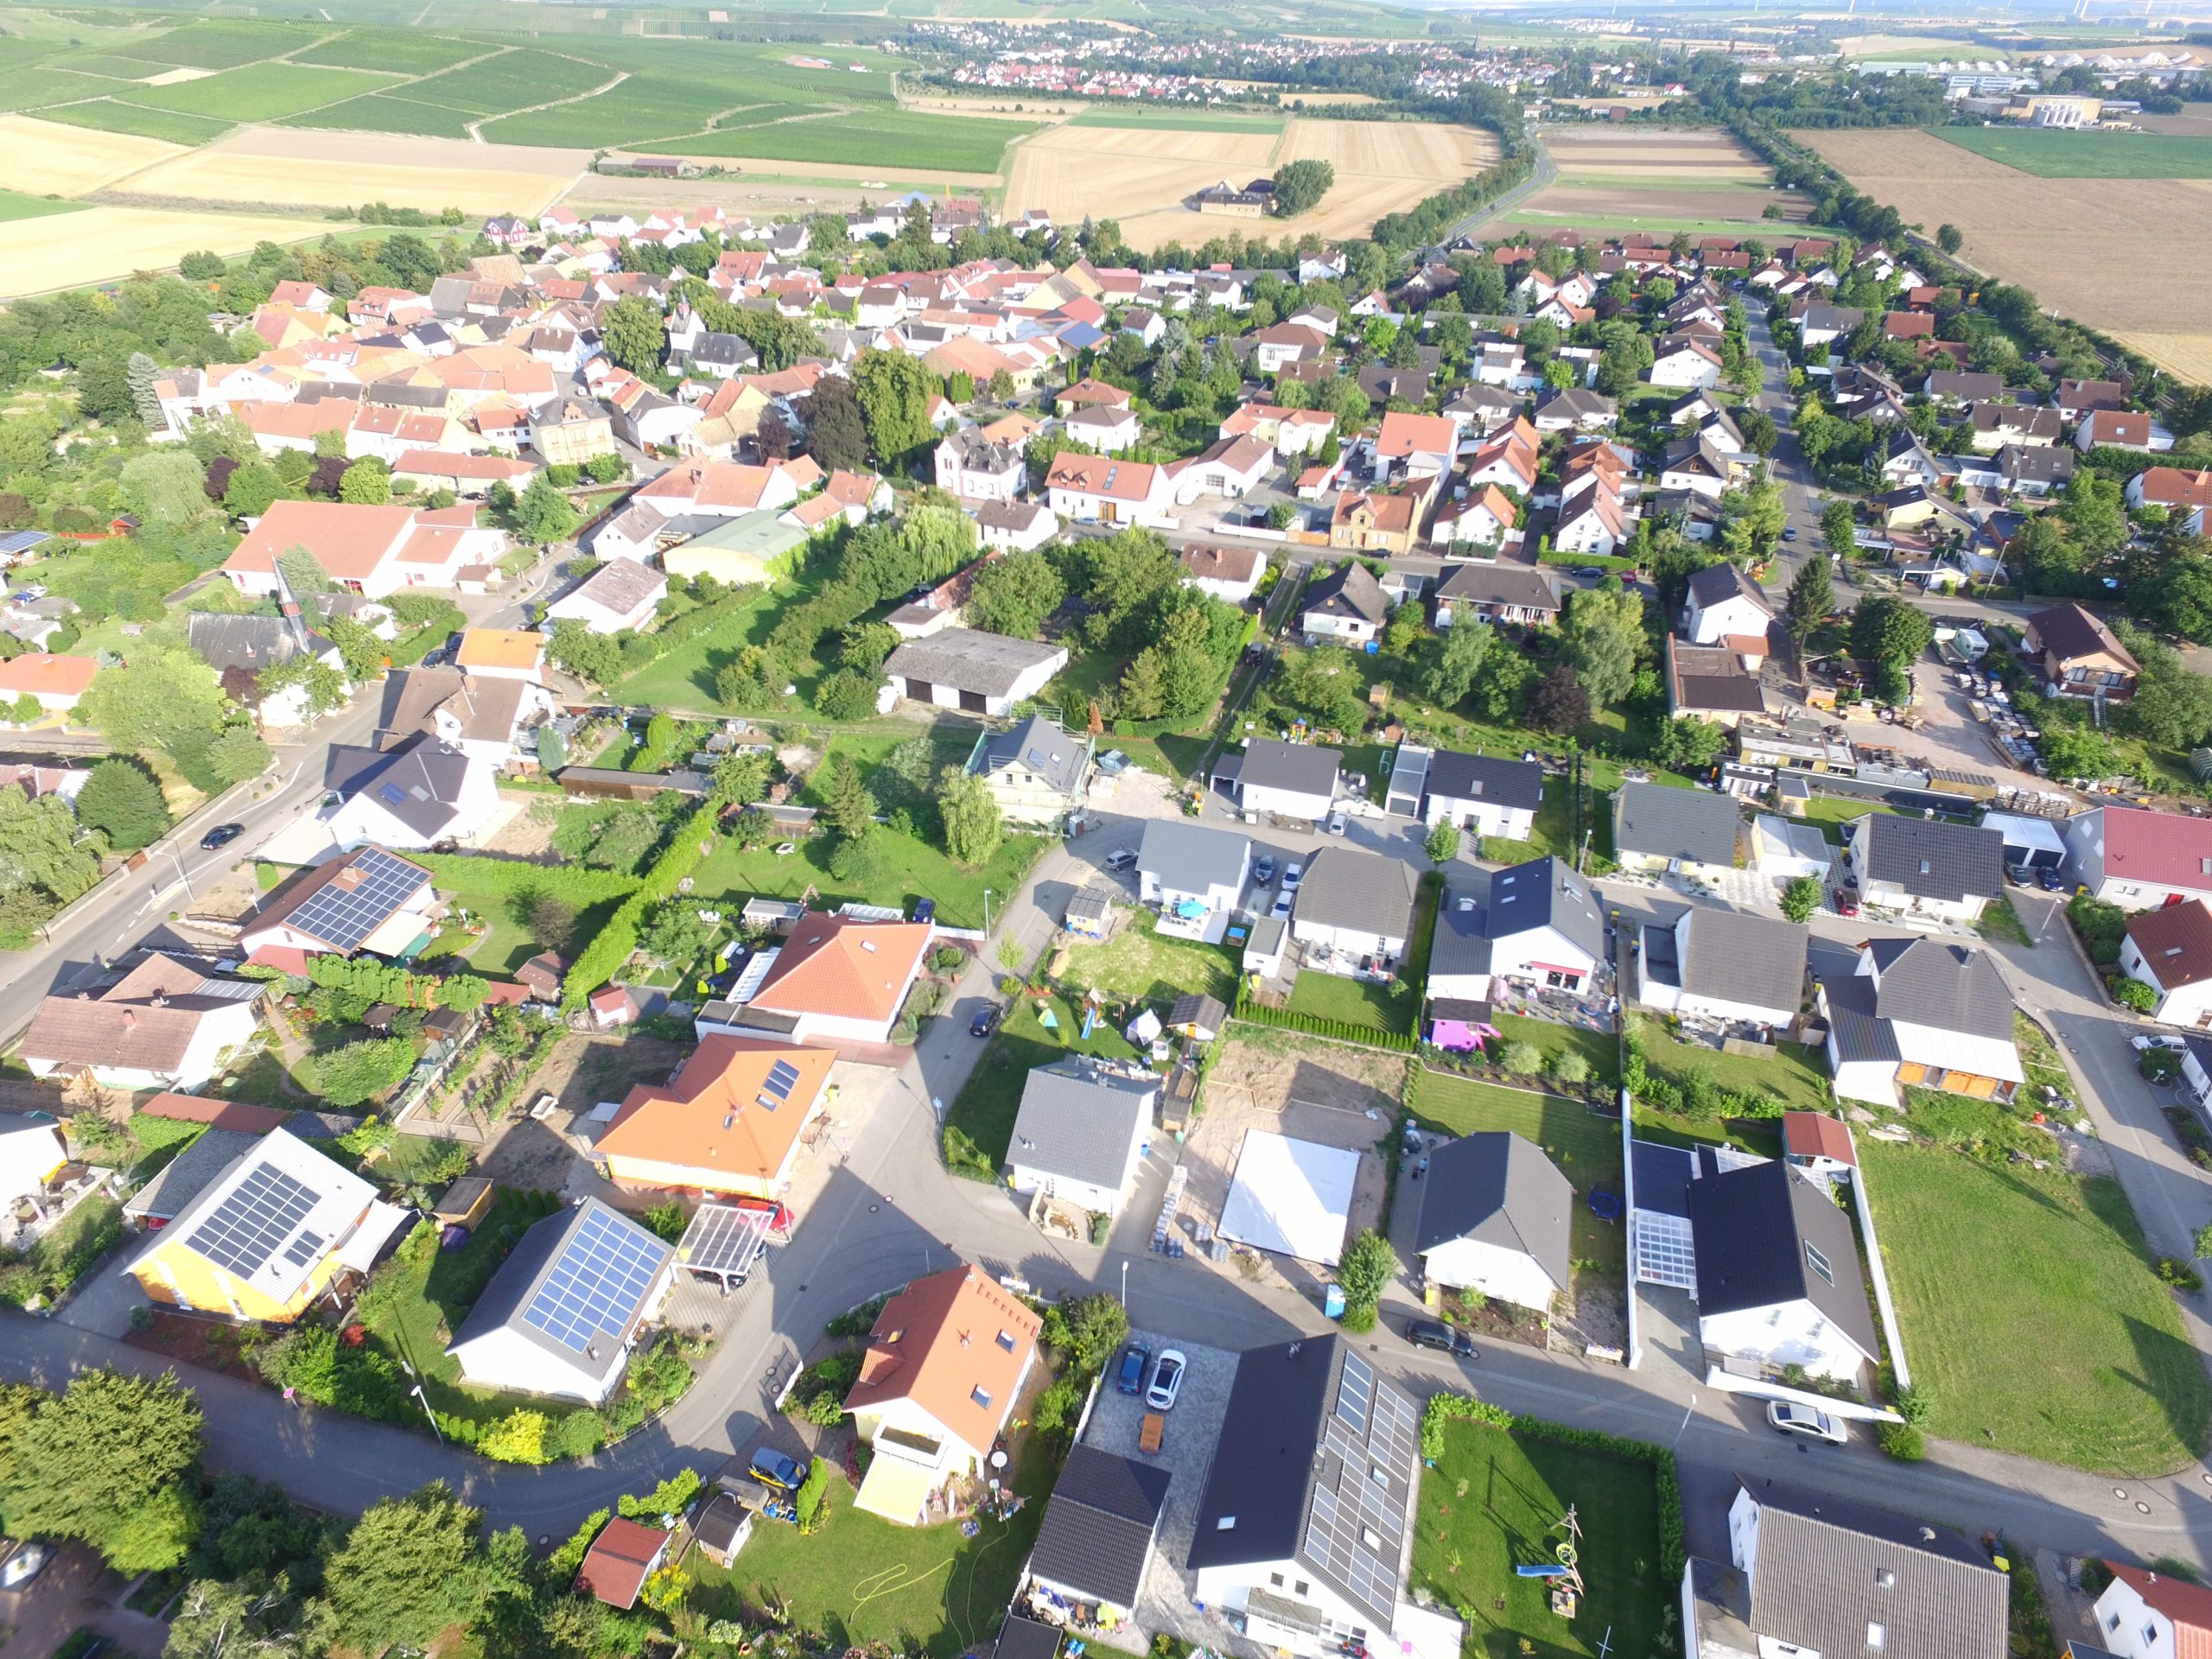 Aerial view of neighborhood during warmer months